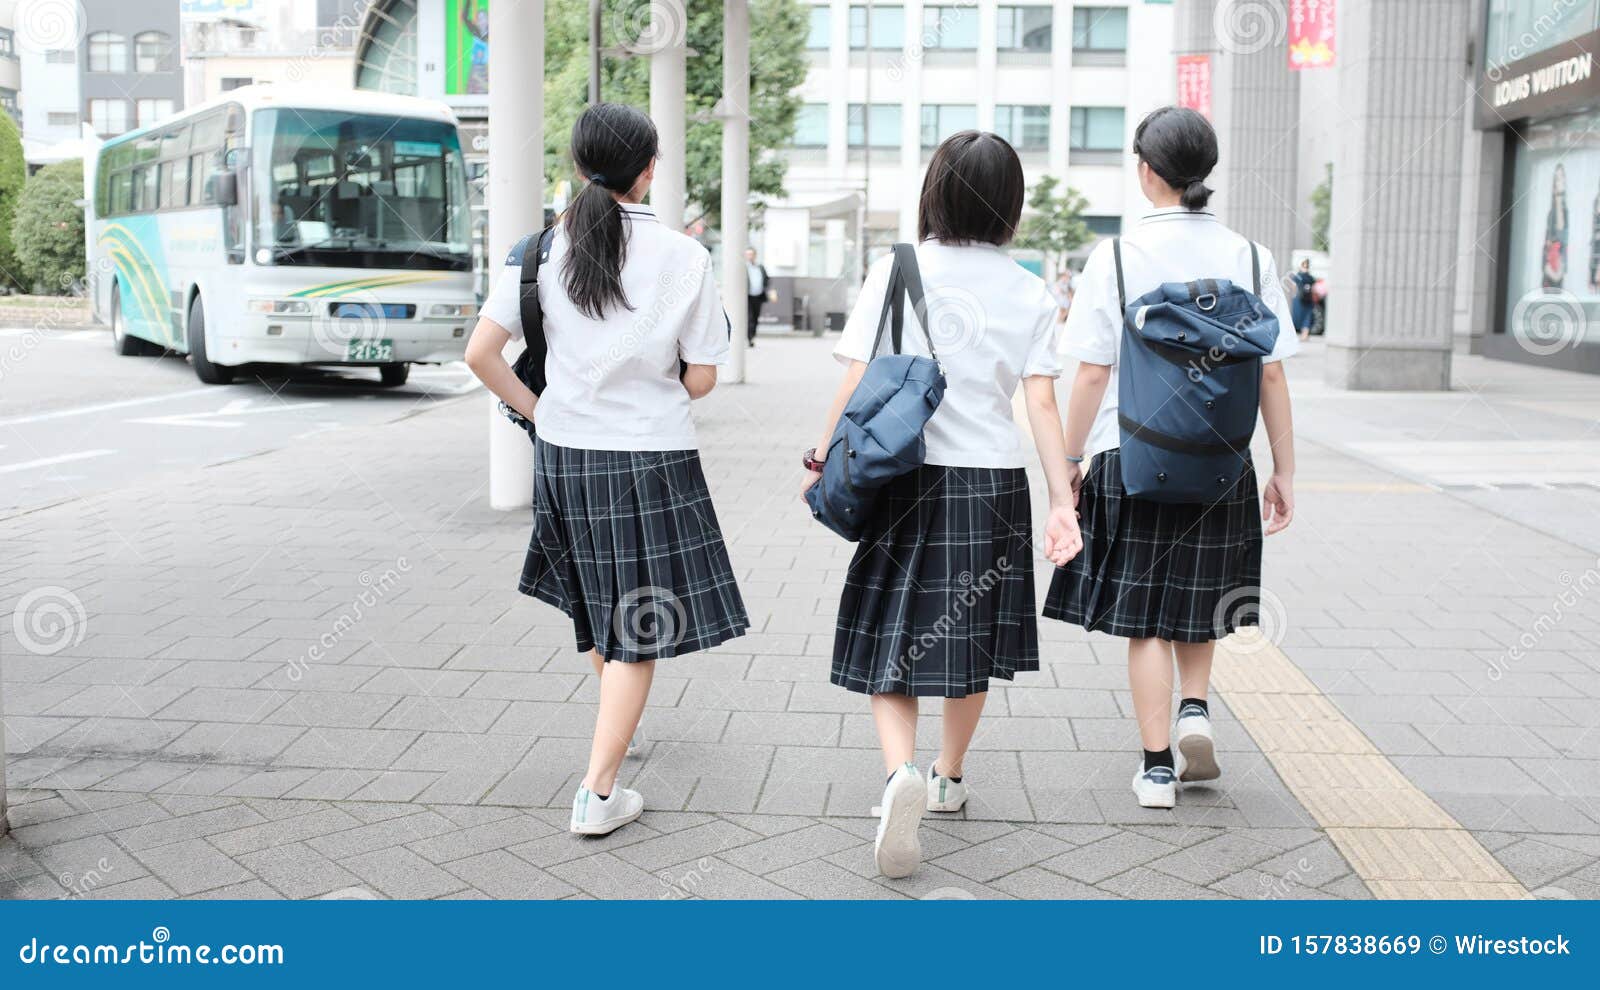 schoolgirl japanese public bus video gallerie photo